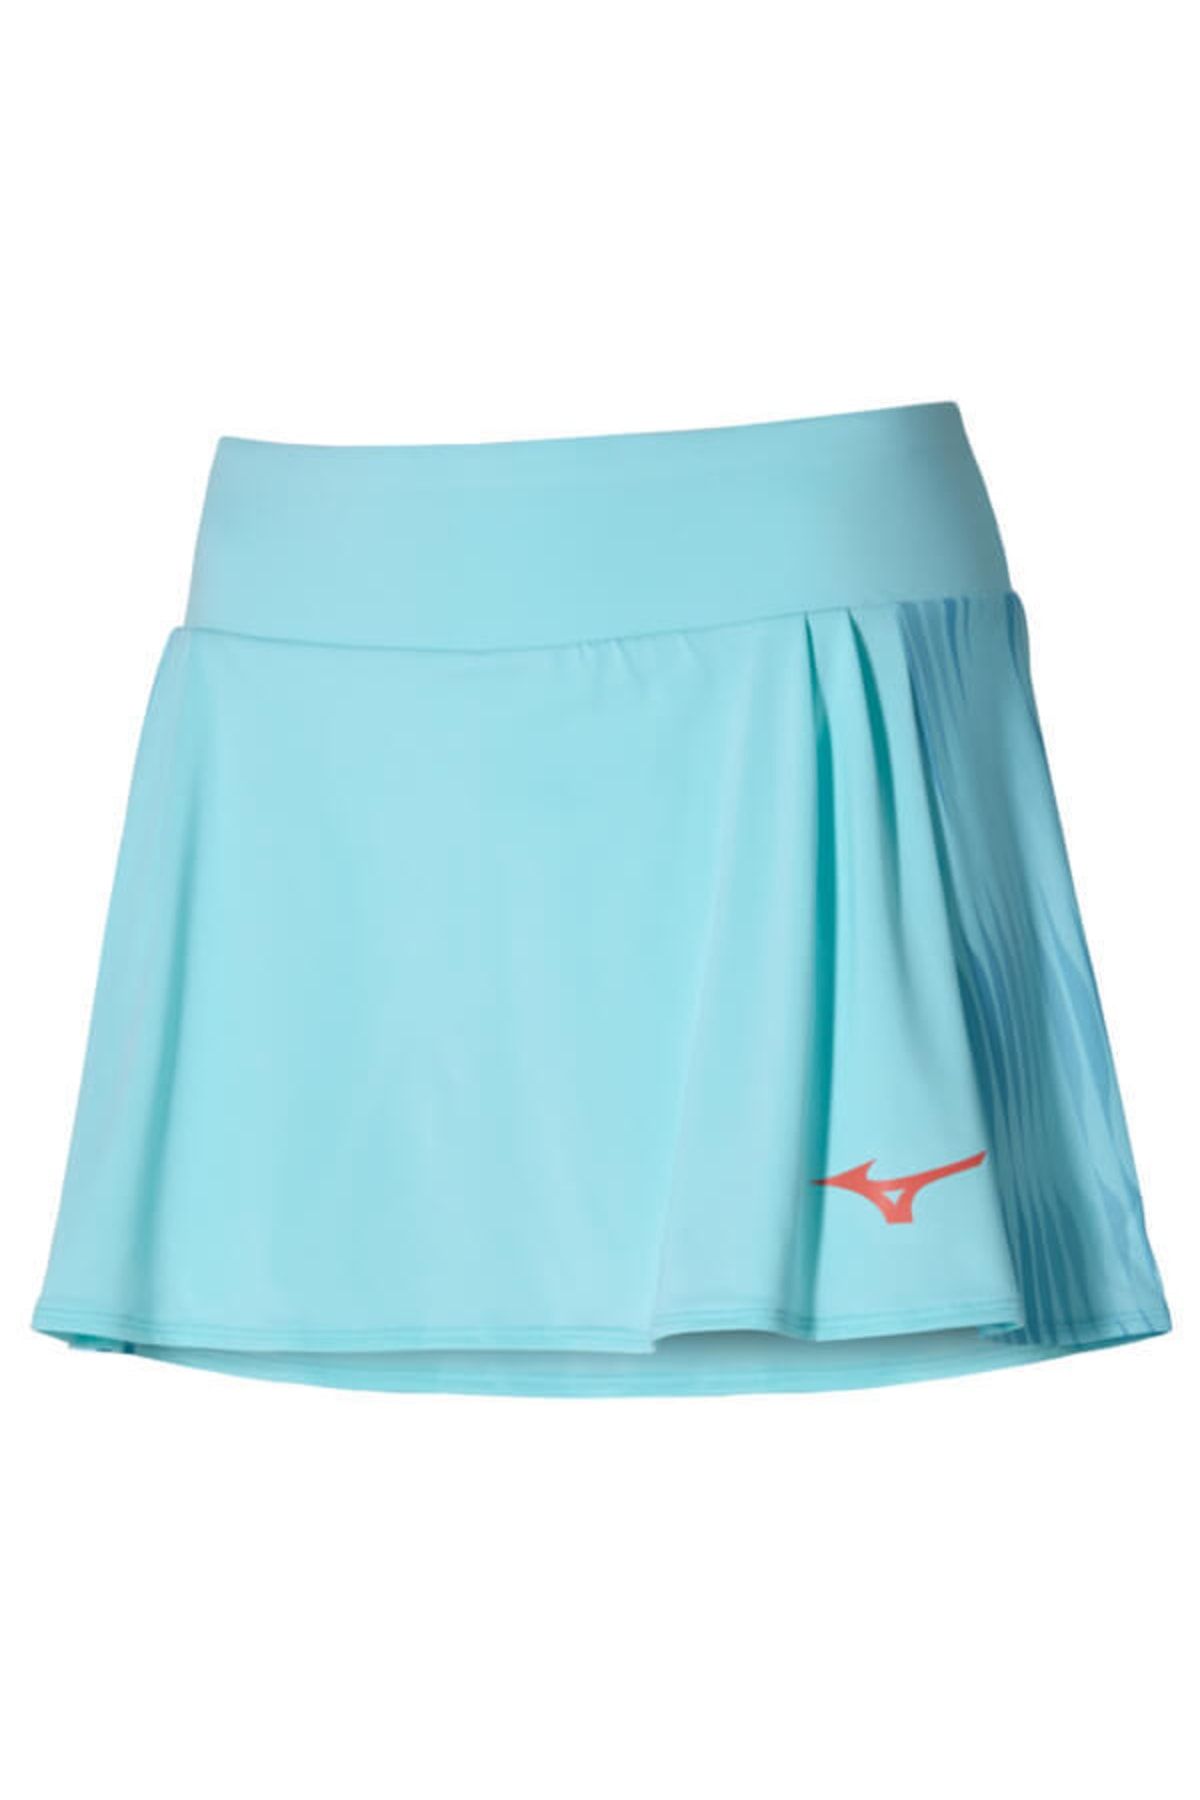 Mizuno Printed Flying Skirt Kadın Tenis Eteği Mavi